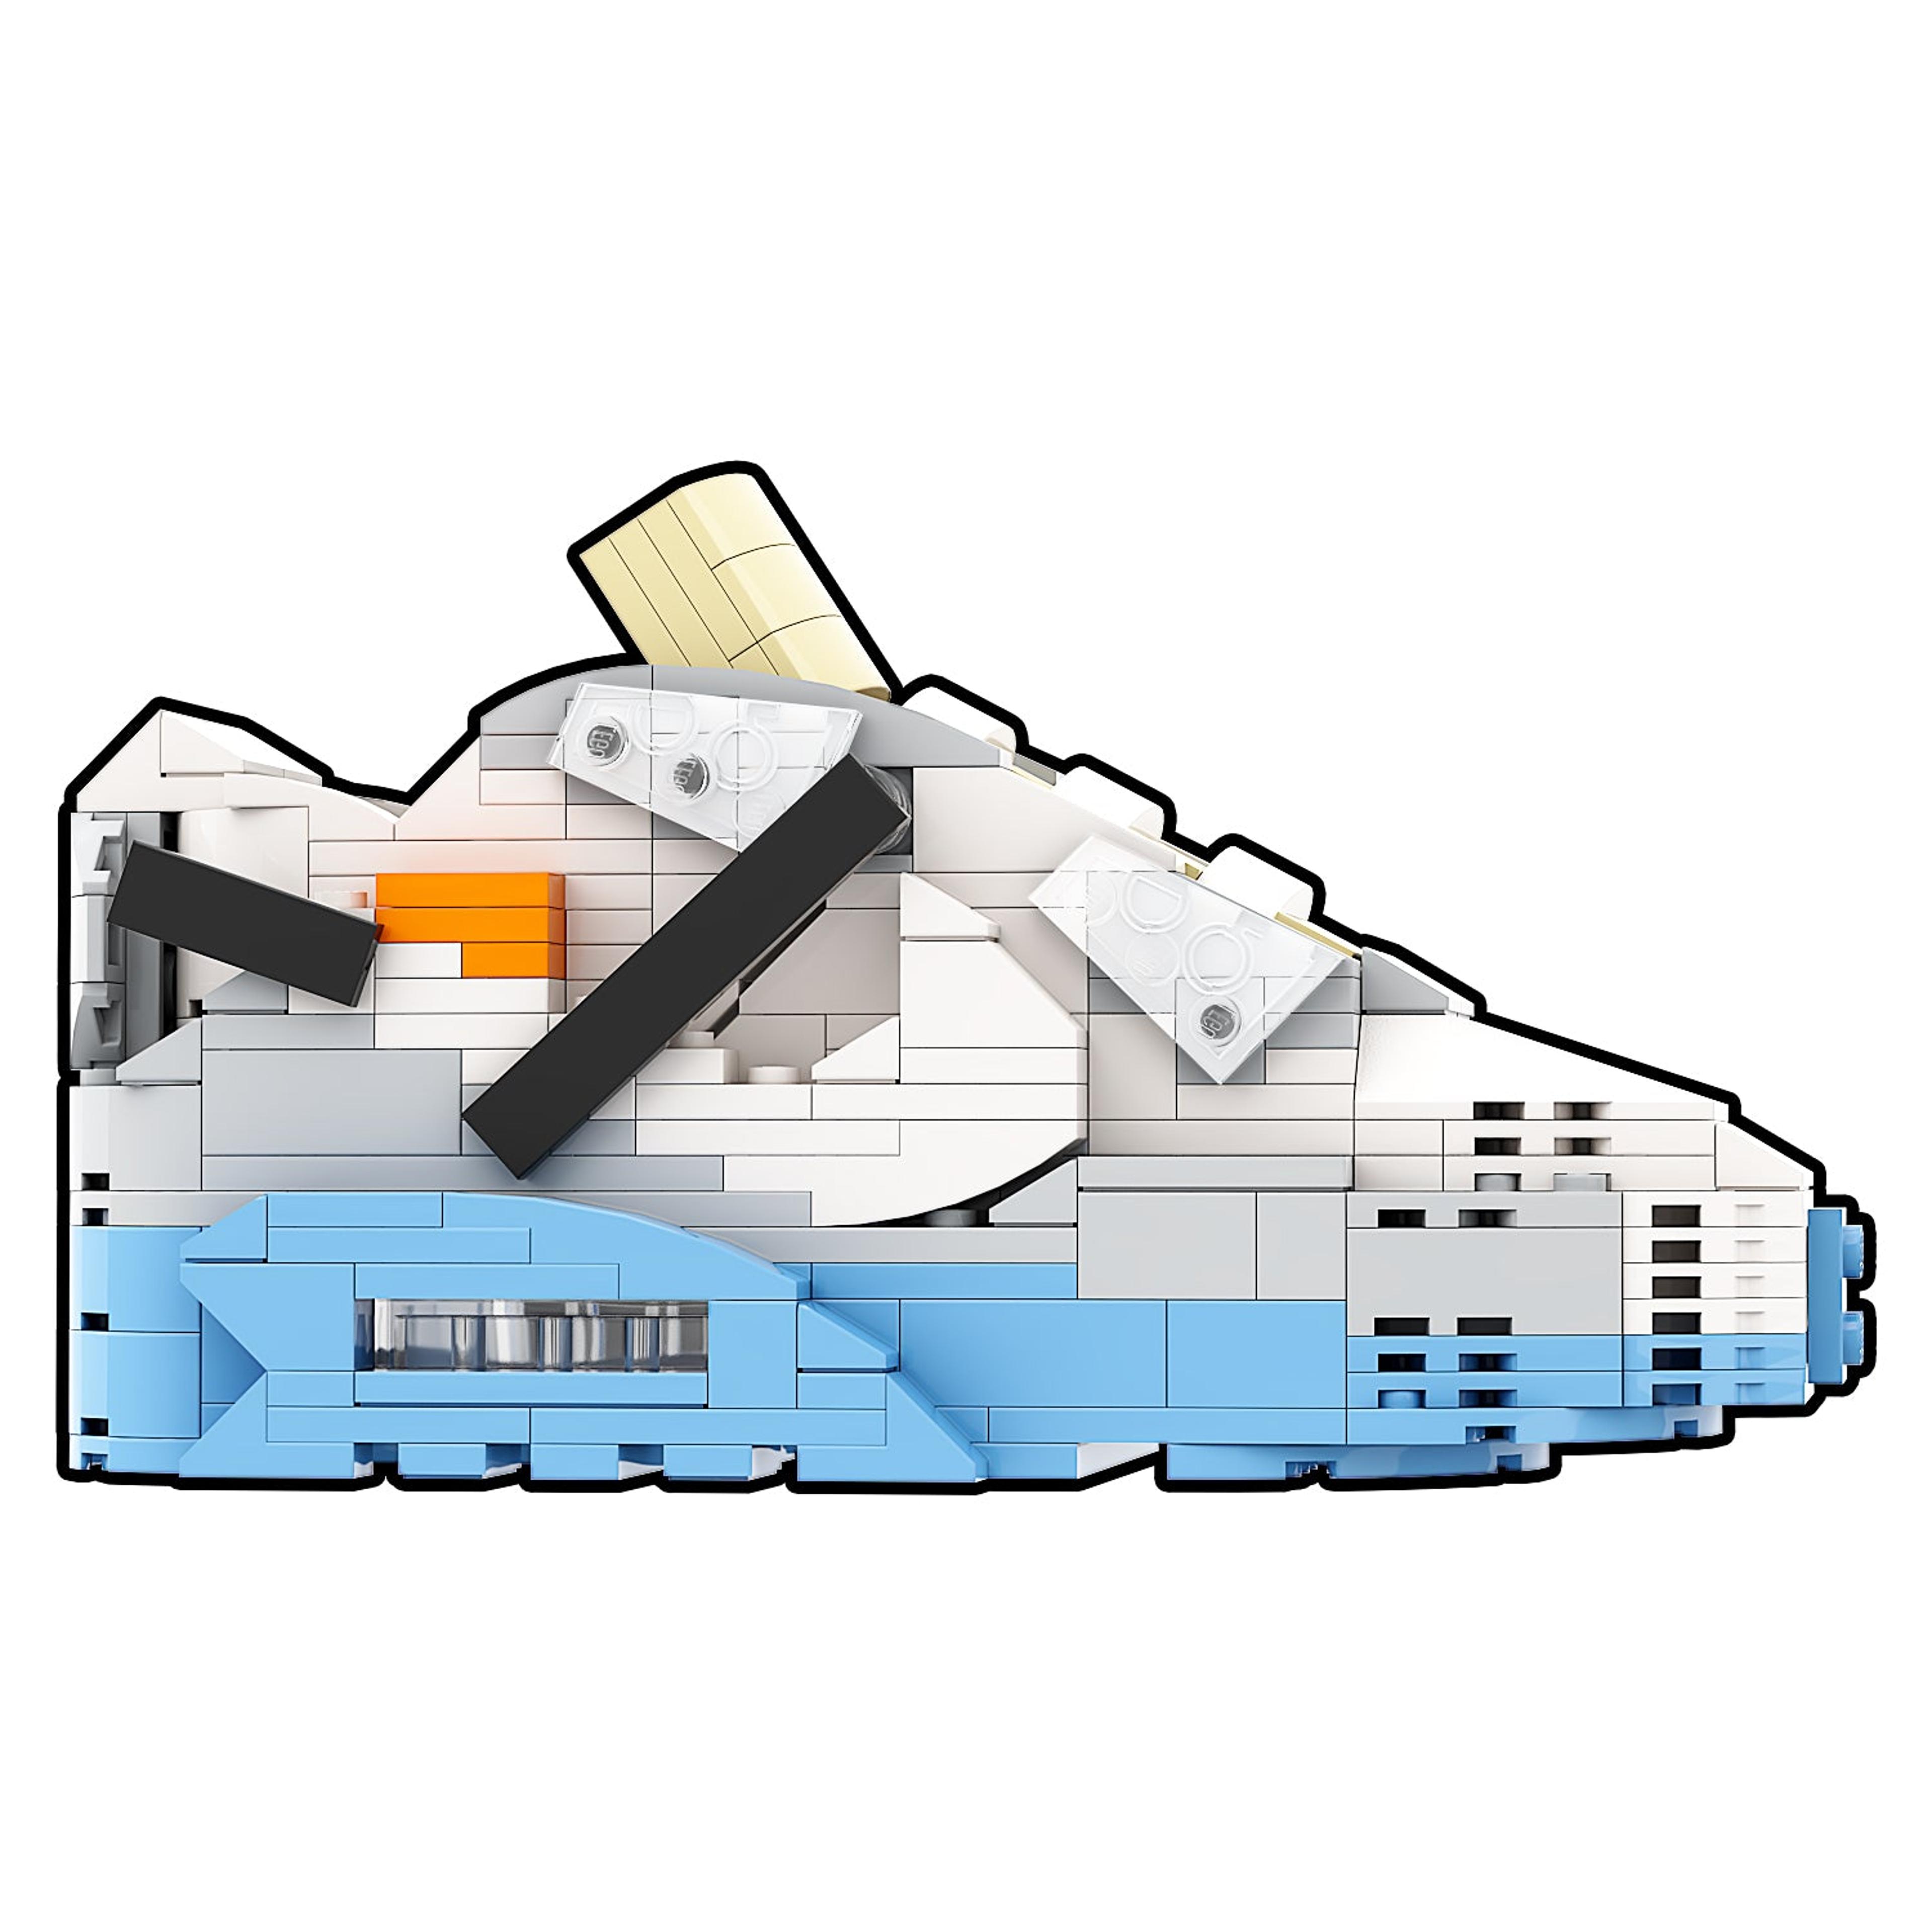 Alternate View 4 of REGULAR Air Max 90 "Off-White White" Sneaker Bricks with Mini Fi